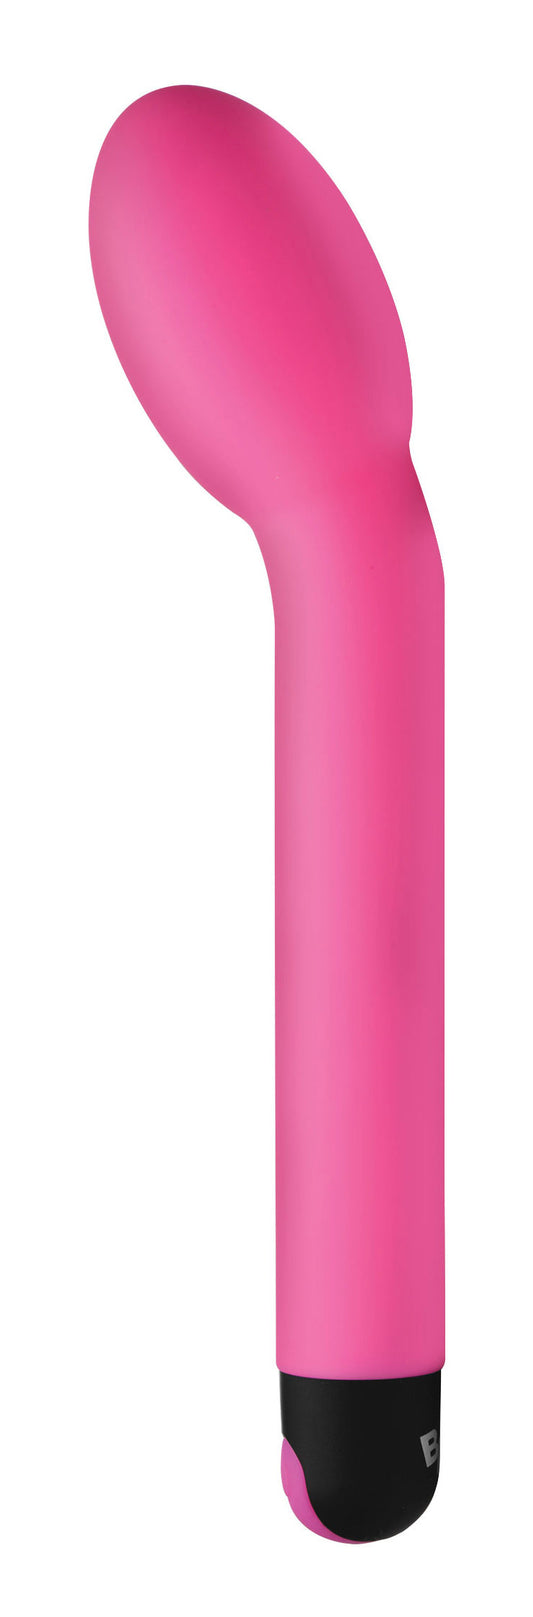 10x G-Spot Vibrator - Pink